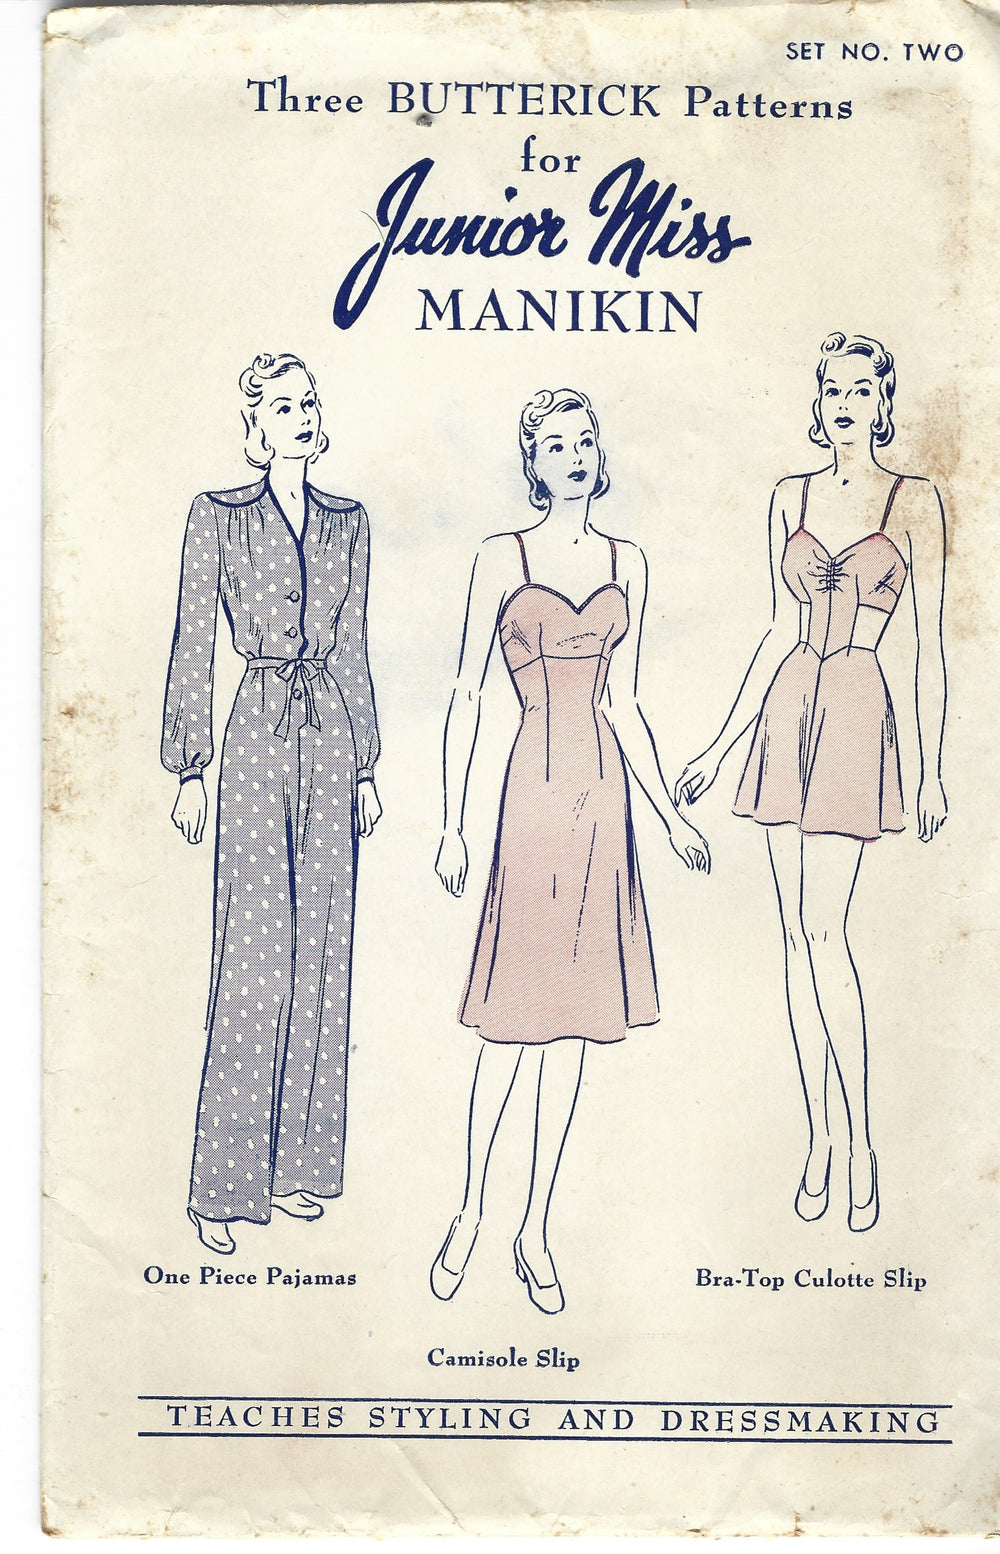 Butterick Set Two Junior Miss Manikin Manniquin Doll Pajamas Camisole Slip Vintage Pattern 1940s